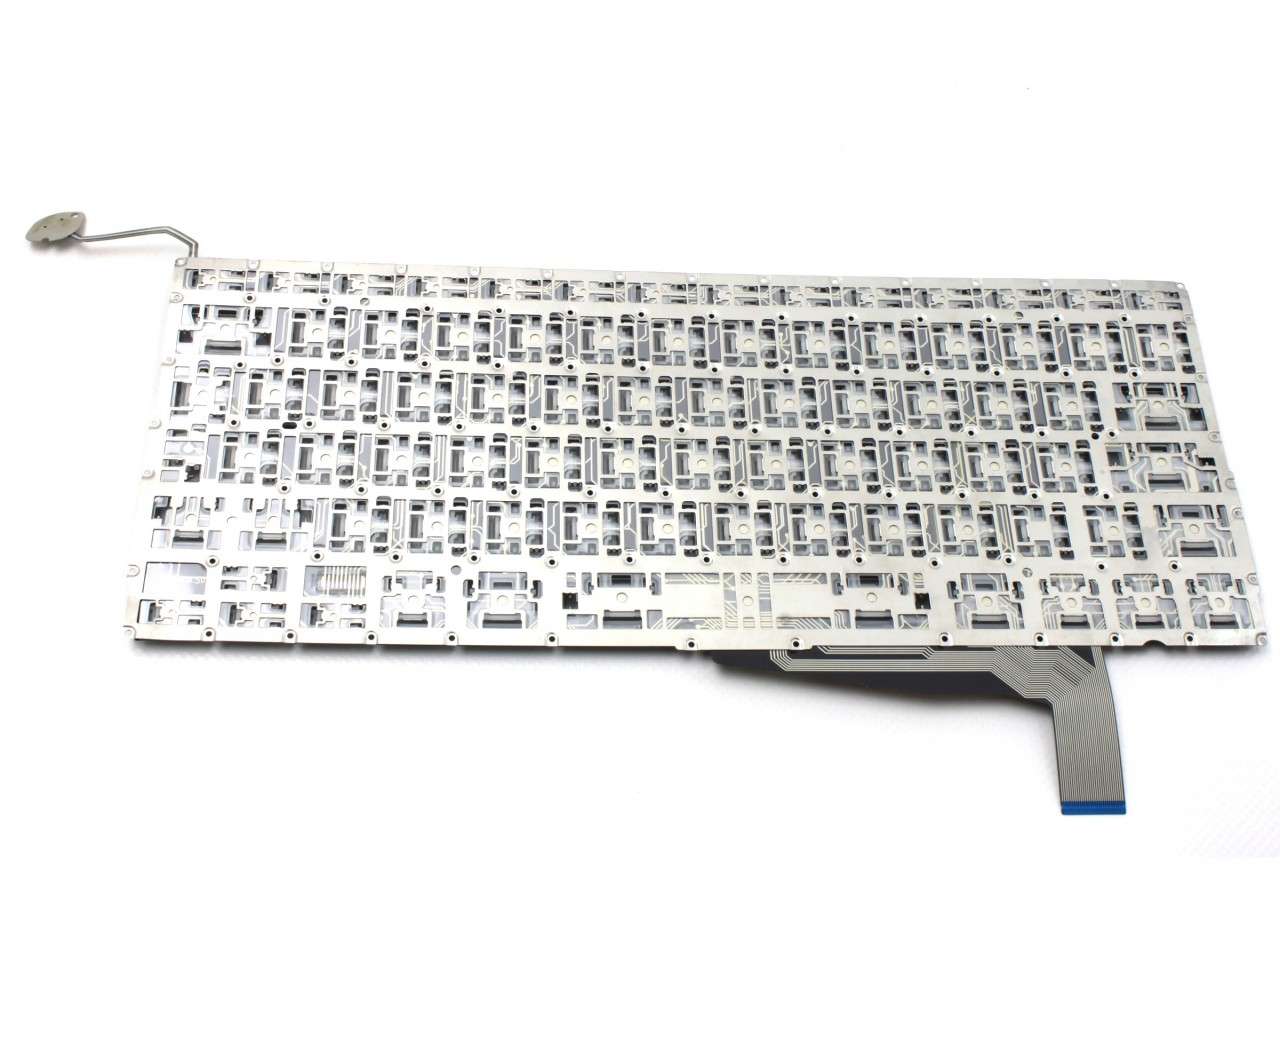 Tastatura Apple MacBook Pro A1286 2008 layout UK fara rama enter mare imagine 2021 Apple